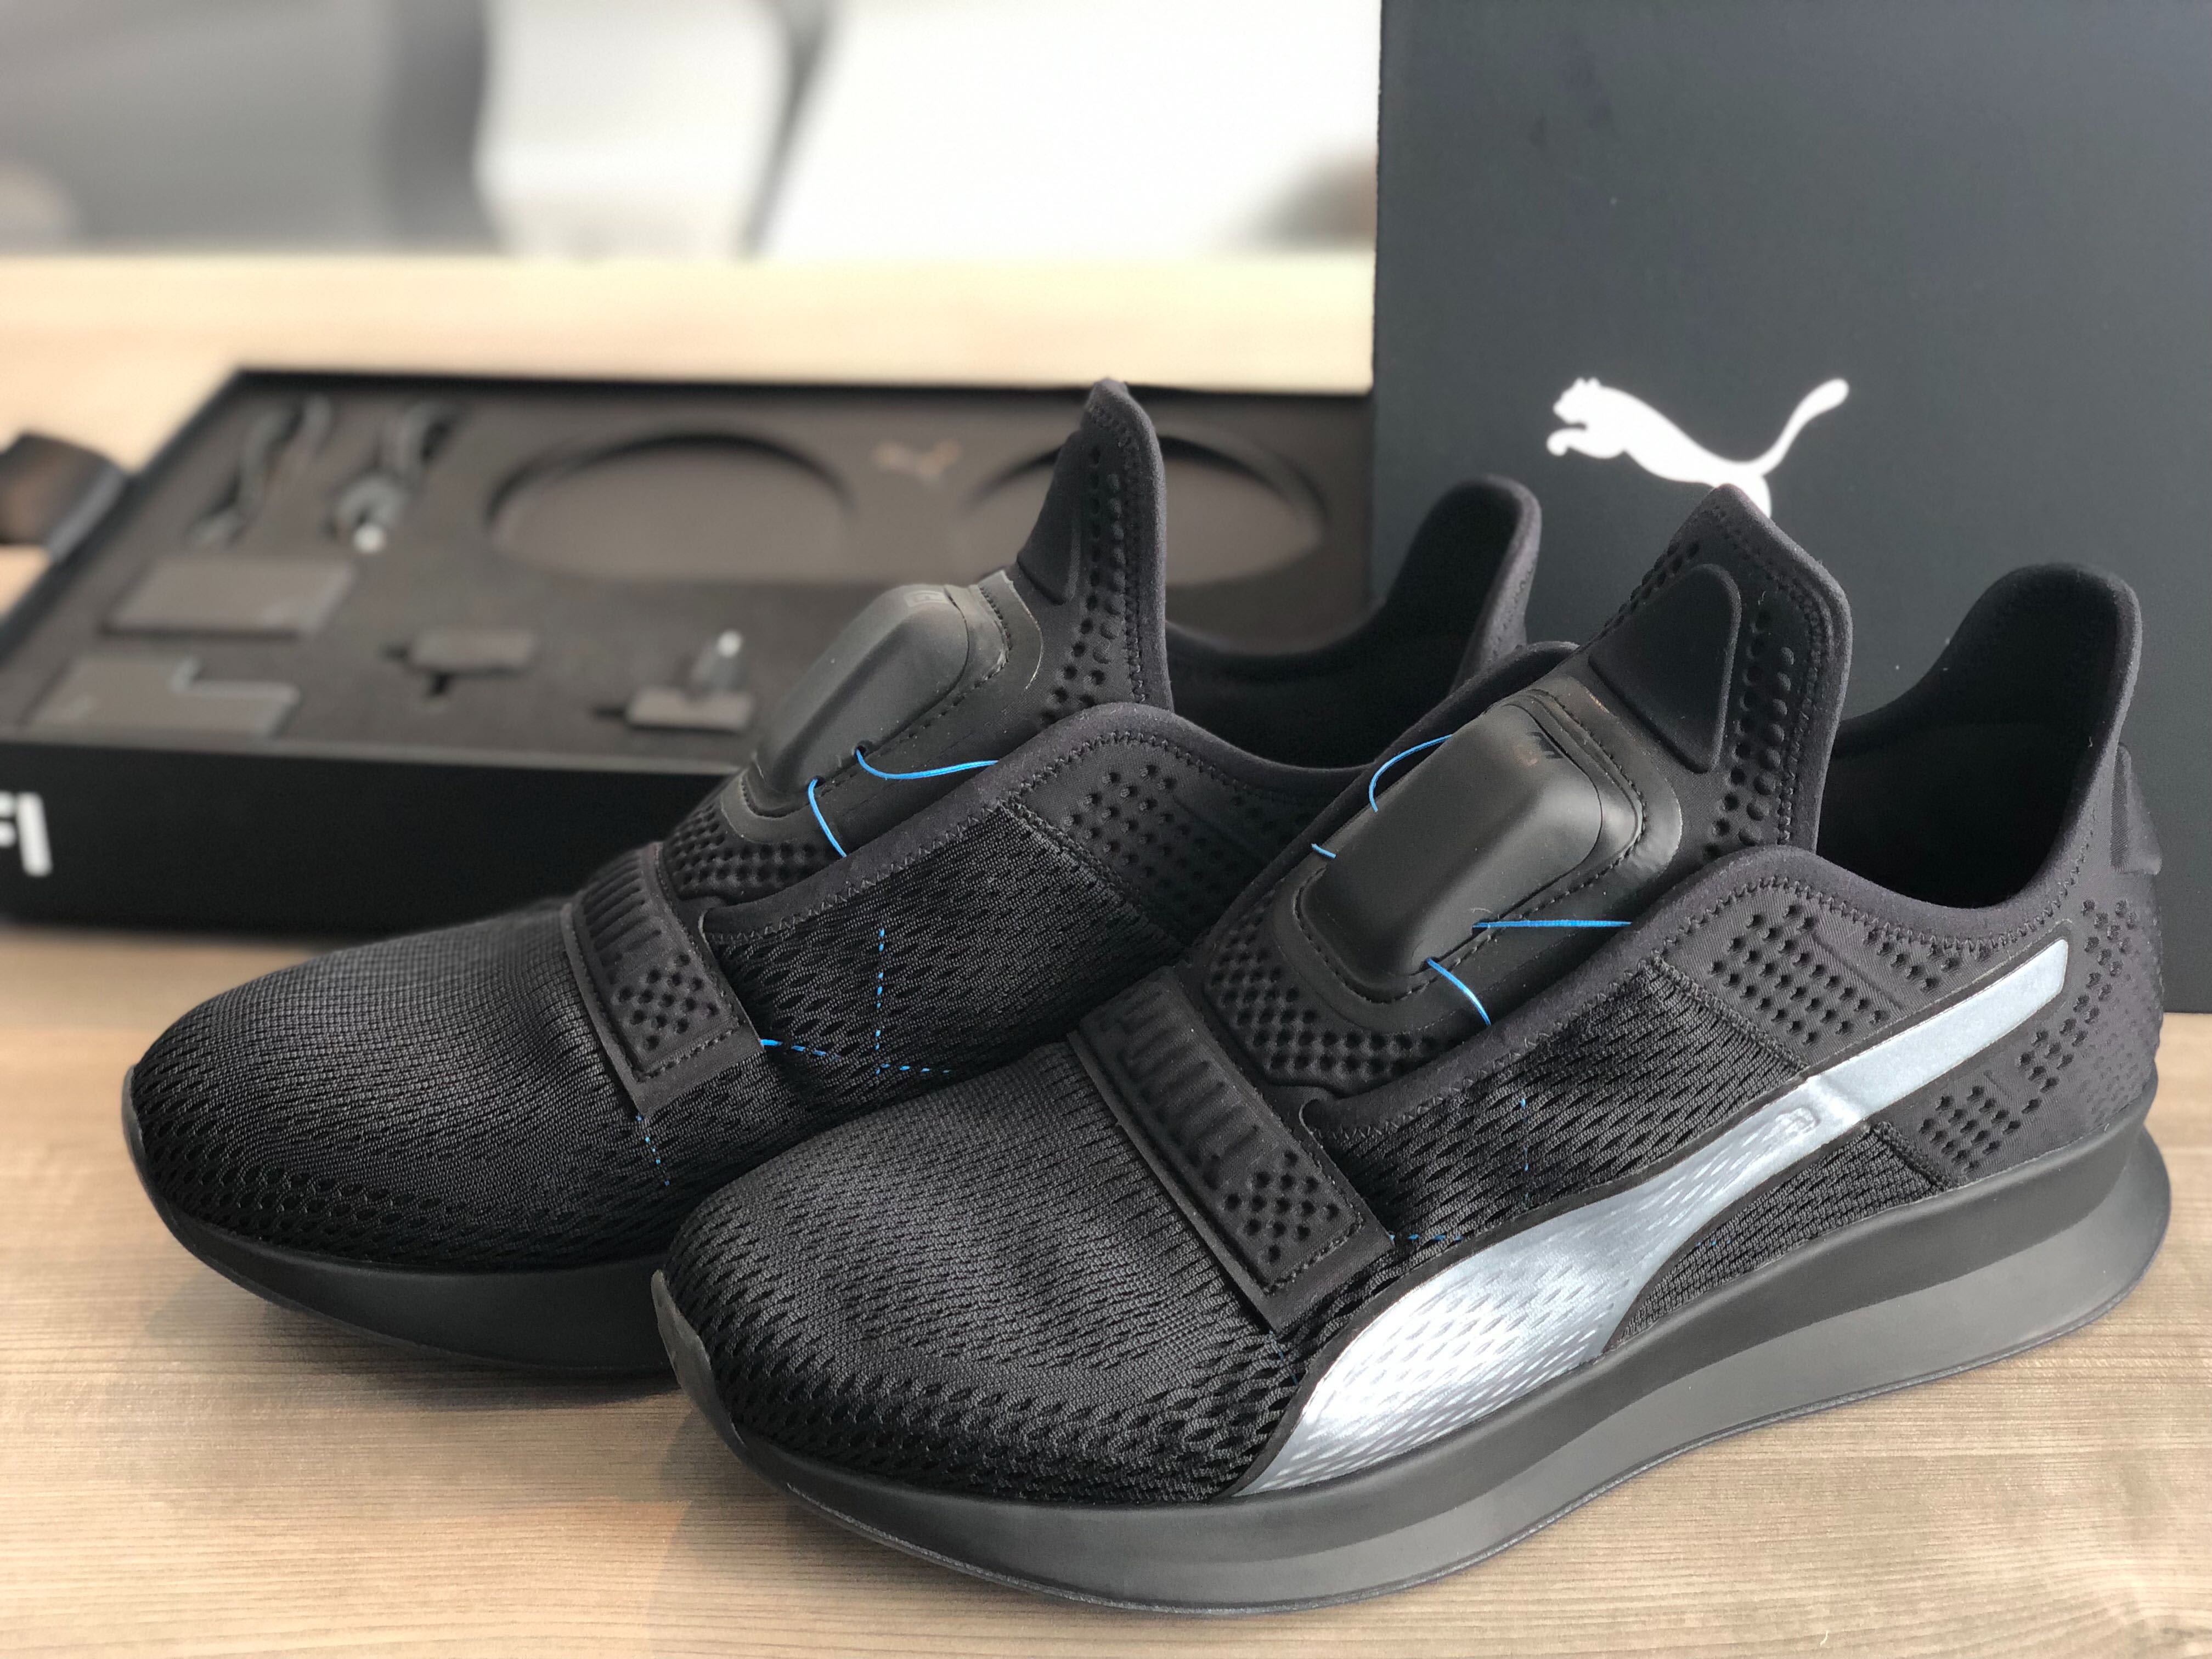 Rana vida Dormitorio High tech shoes: Puma to release self-lacing sneakers to take on Nike